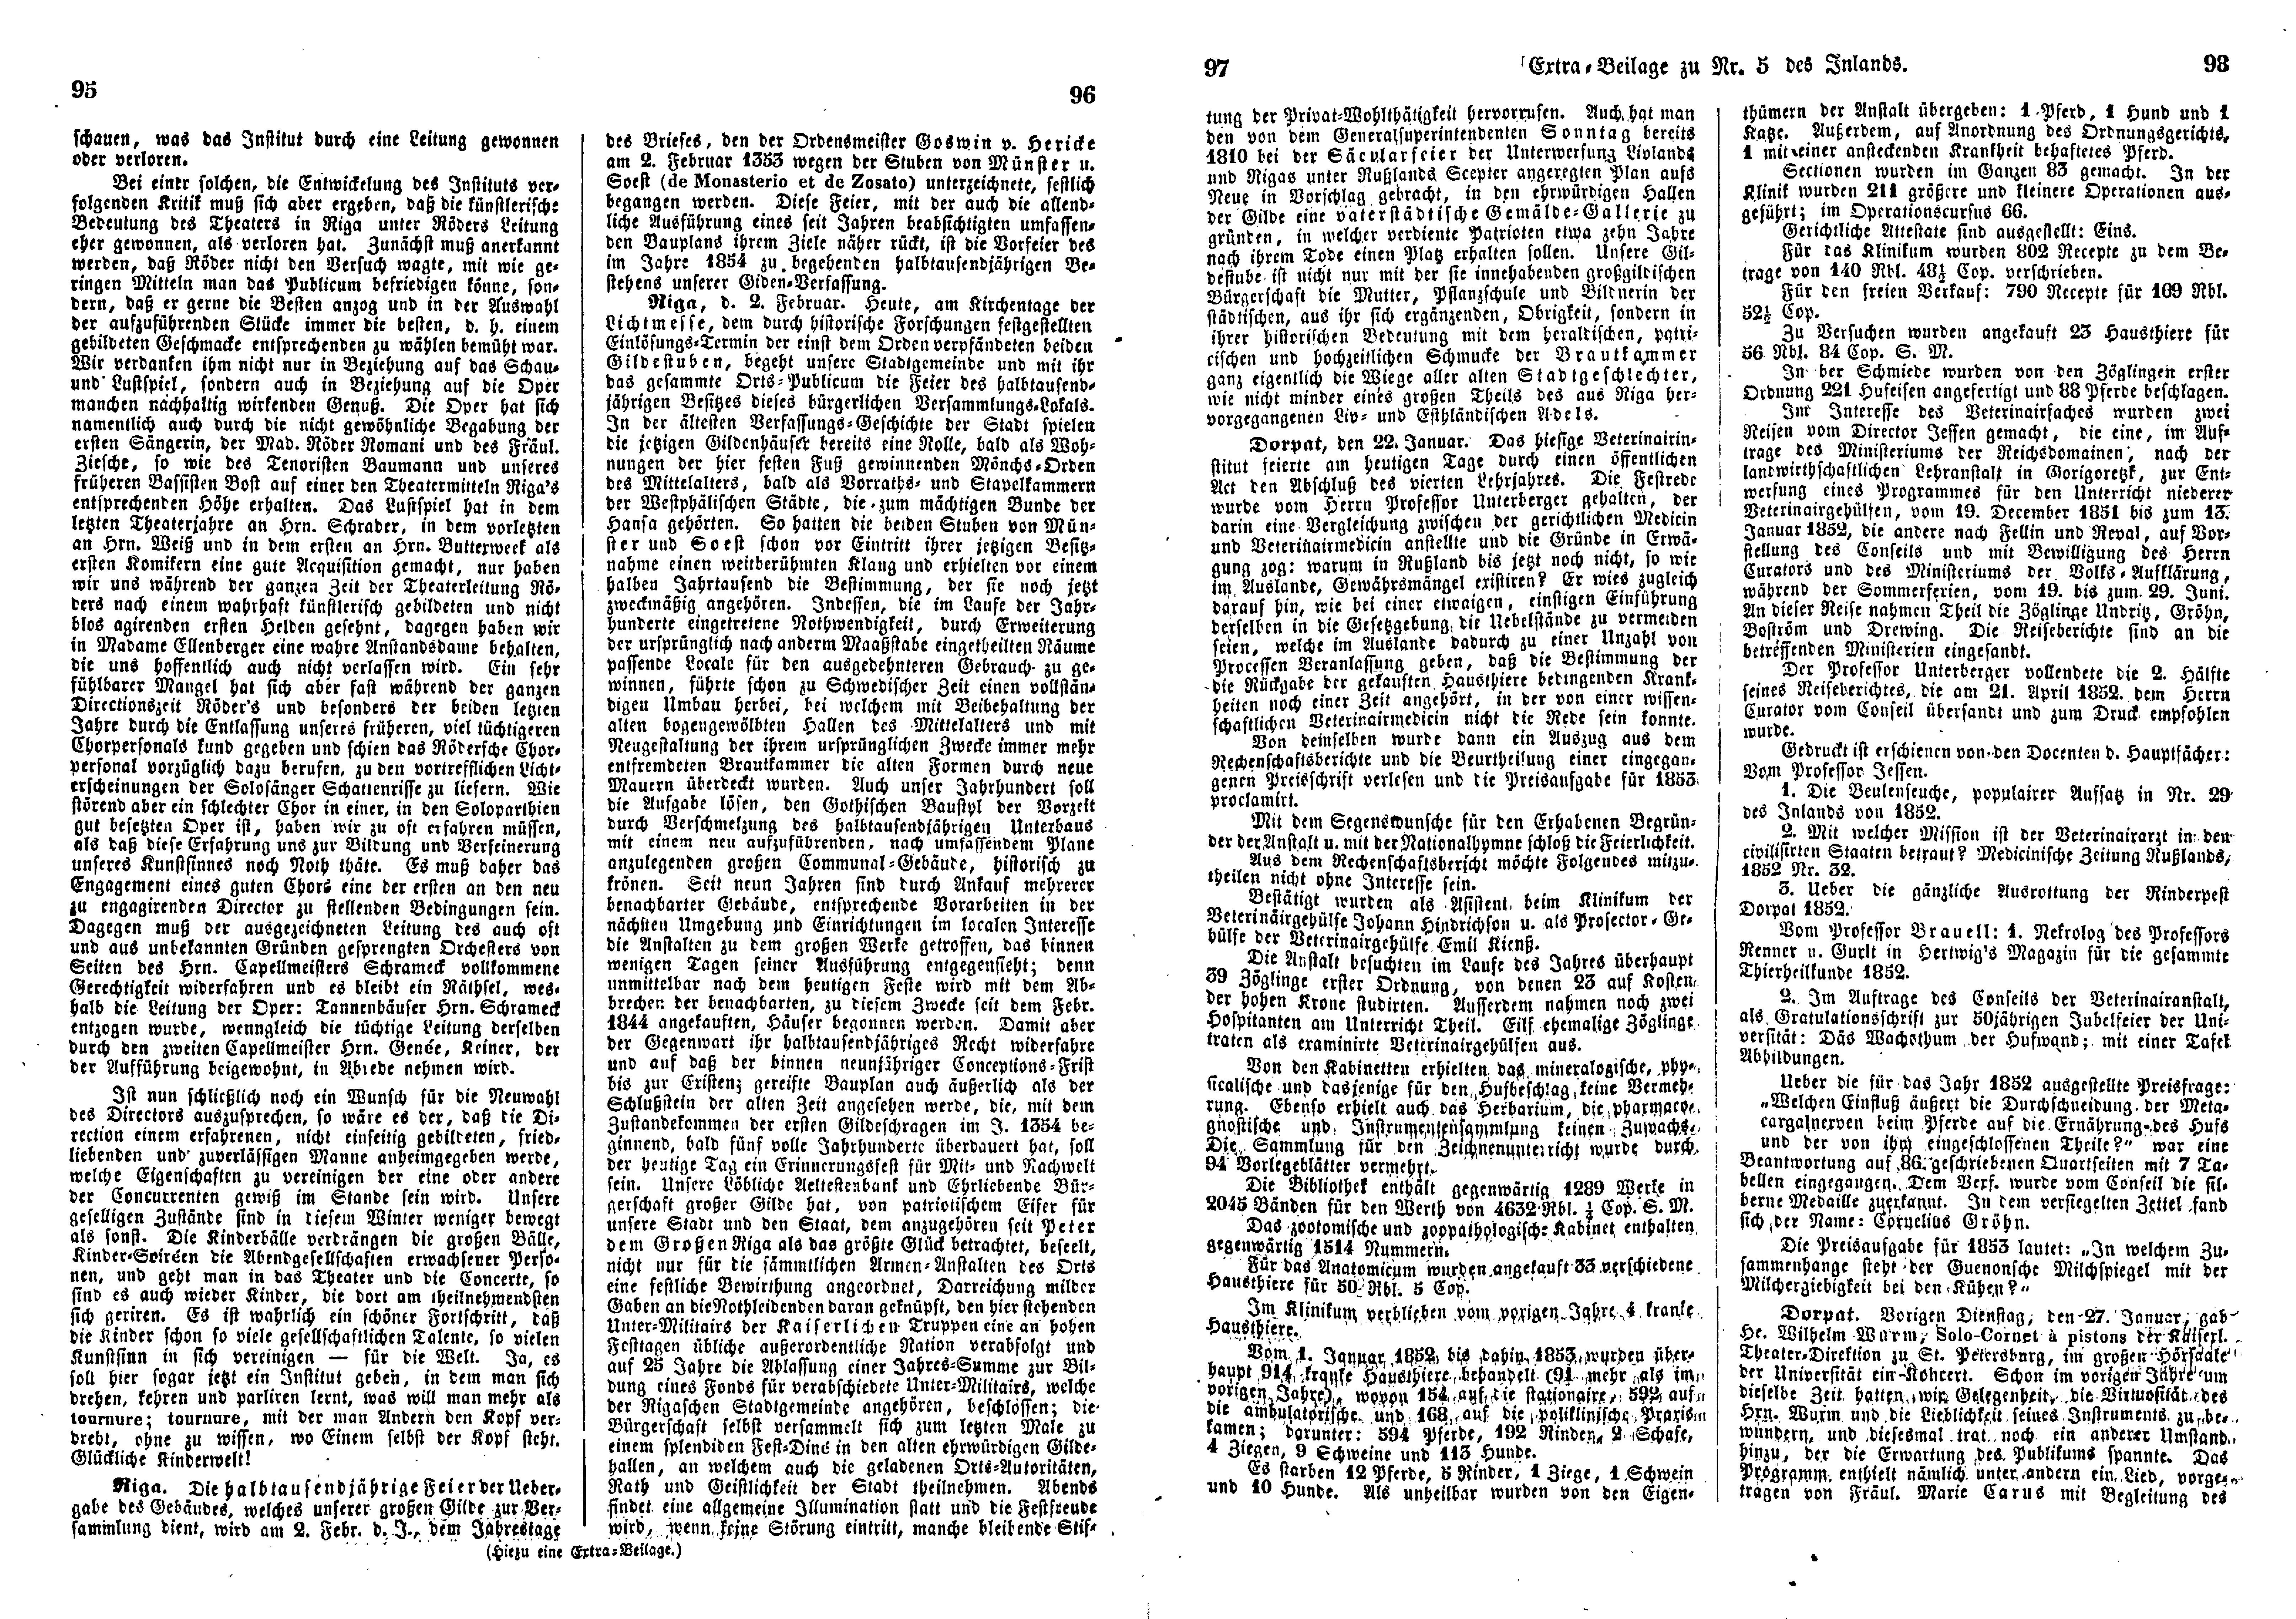 Das Inland [18] (1853) | 34. (95-98) Main body of text